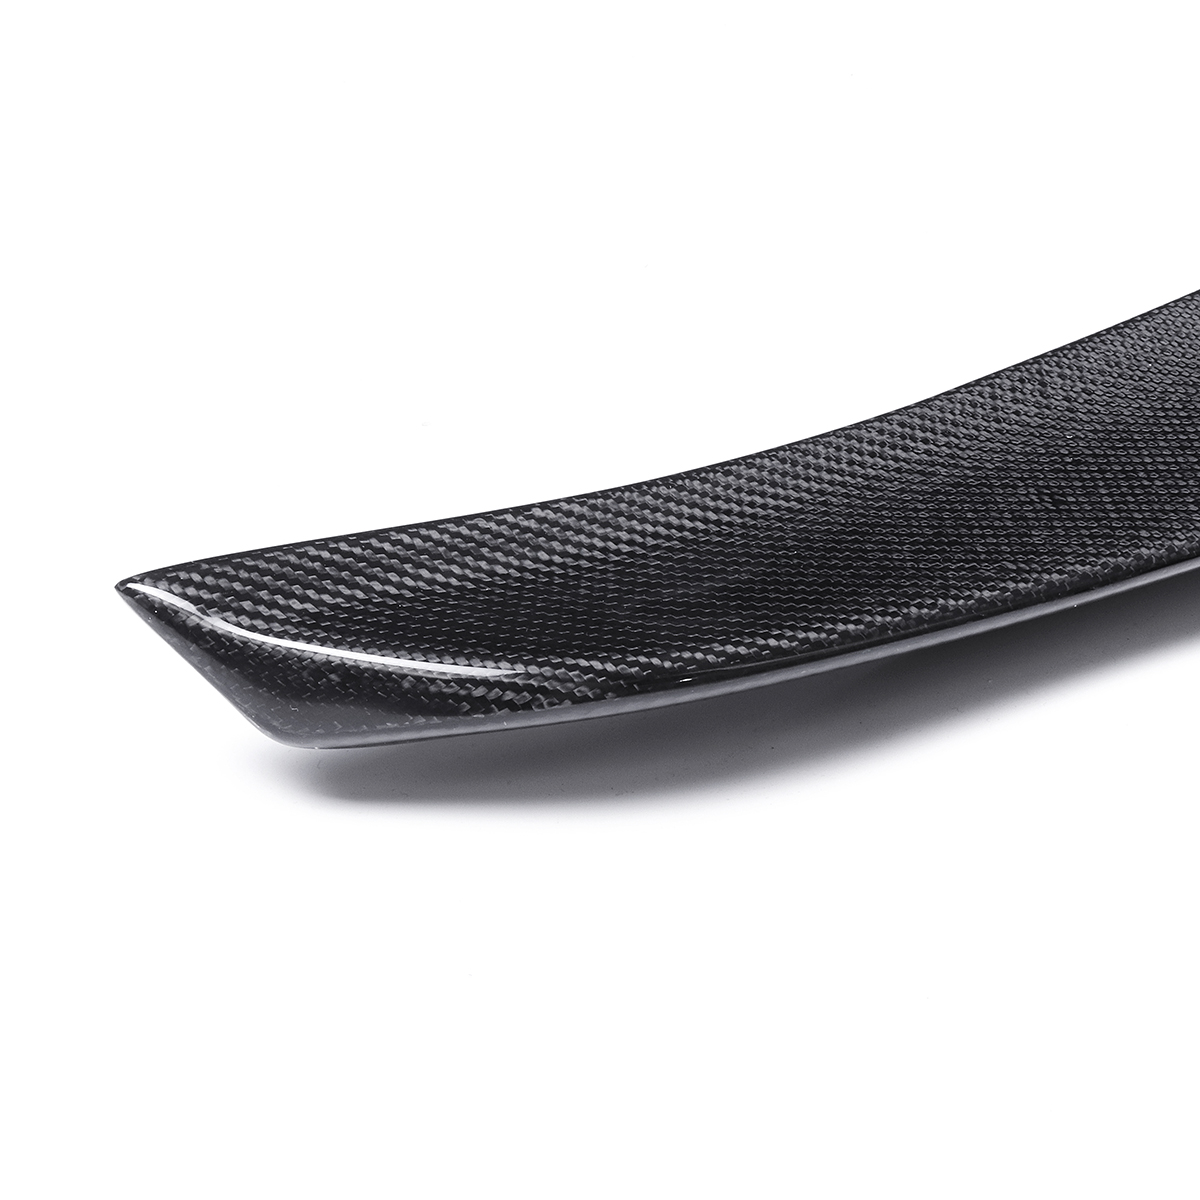 3D Style Carbon Fiber Spoiler Car Modification Rear Trunk Wing Lip for BMW F82 2013-2018